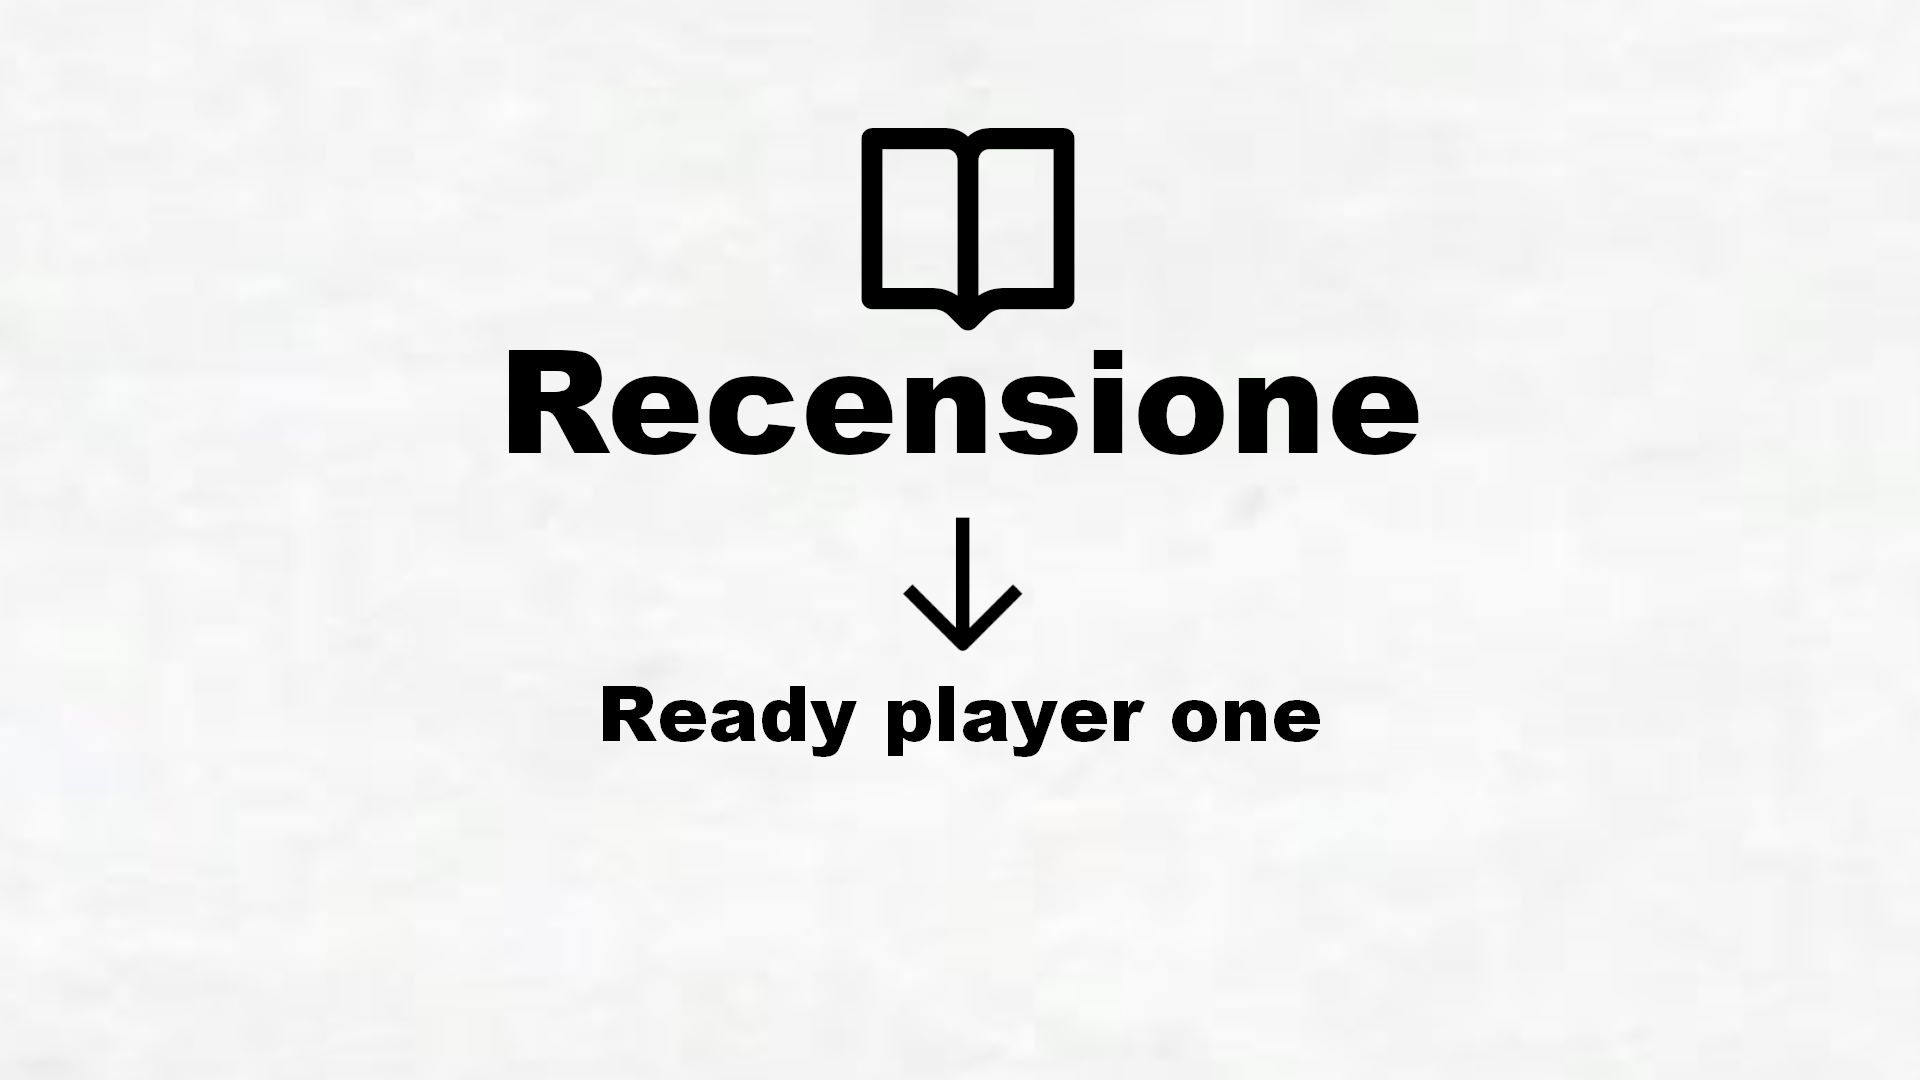 Ready player one – Recensione Libro